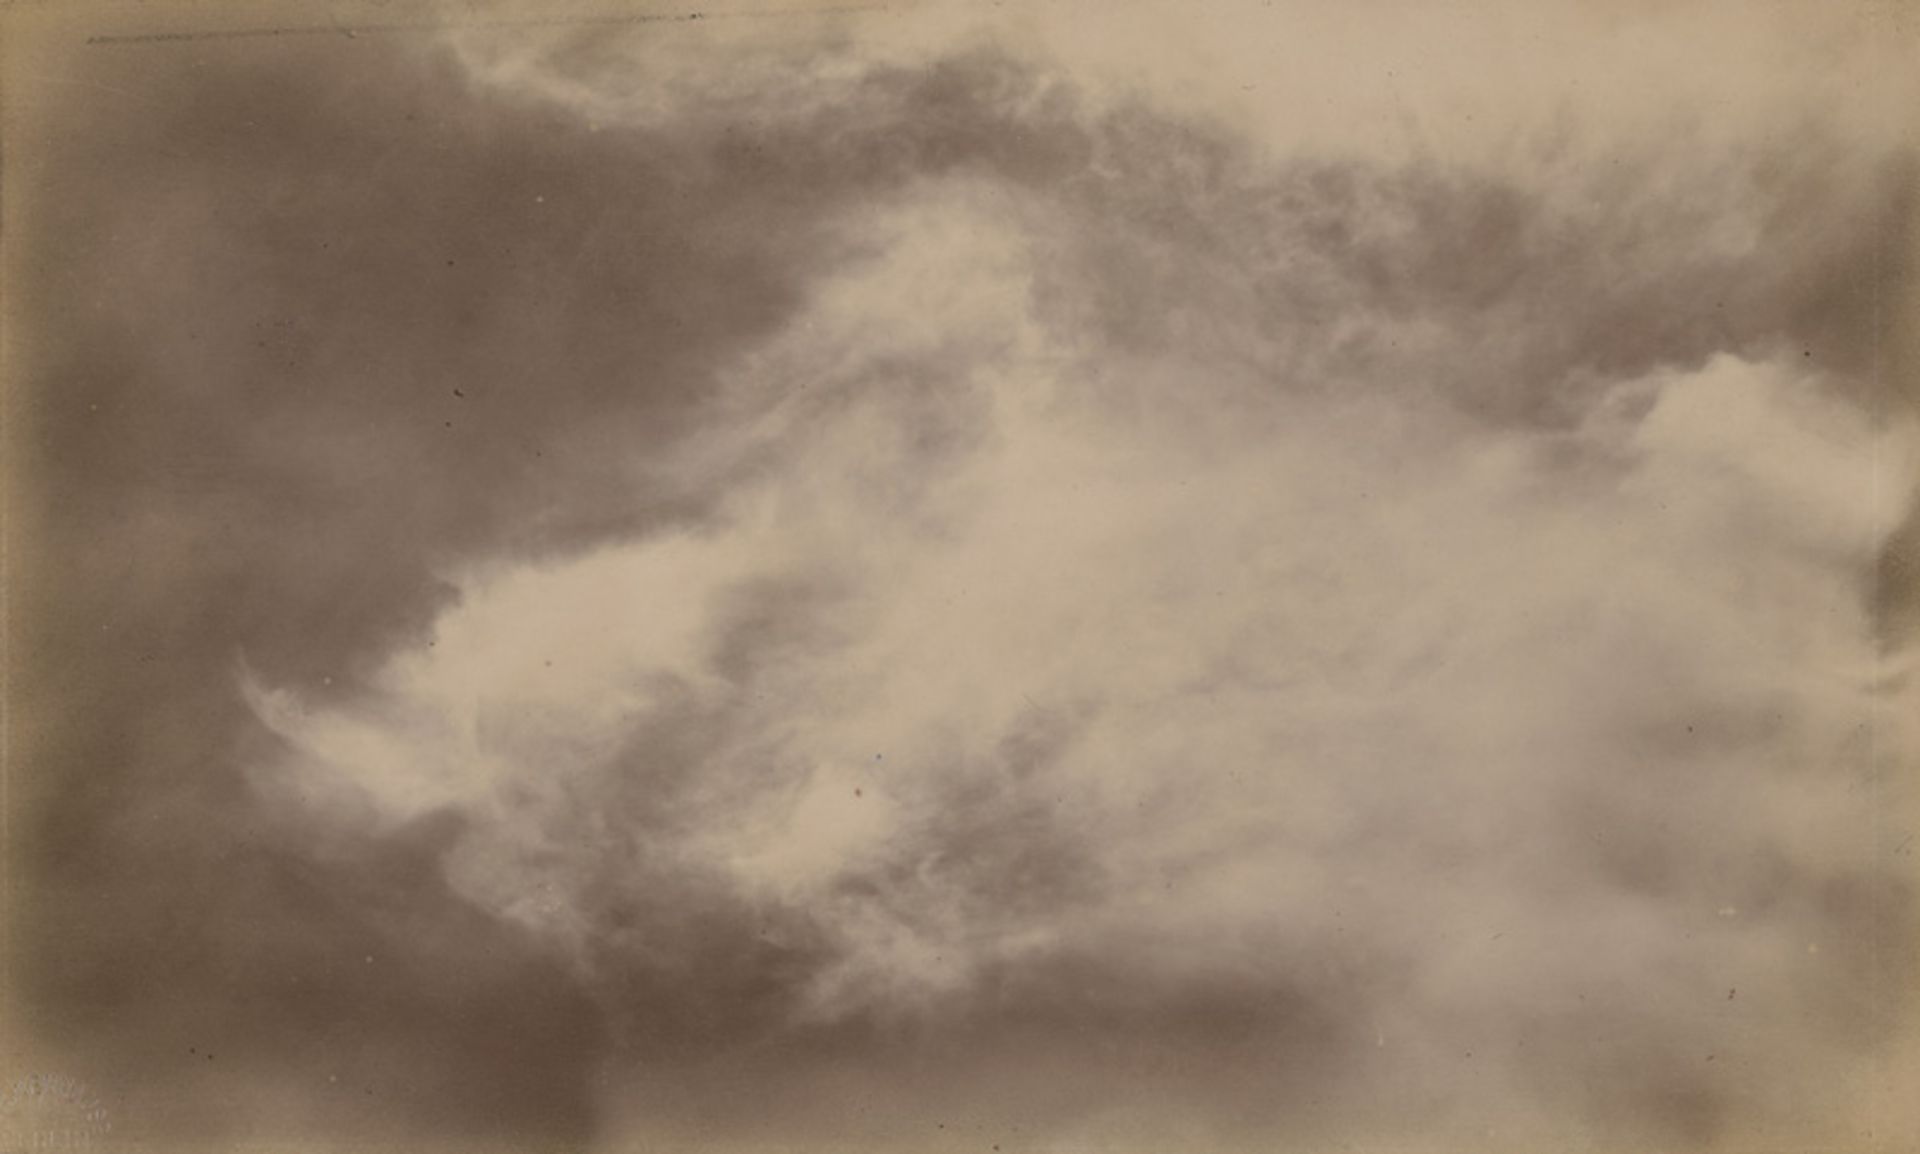 Neuhauss, Dr. Richard Gustav: Selected images from the "Wolken-Atlas" (Cloud Atlas) - Image 3 of 5